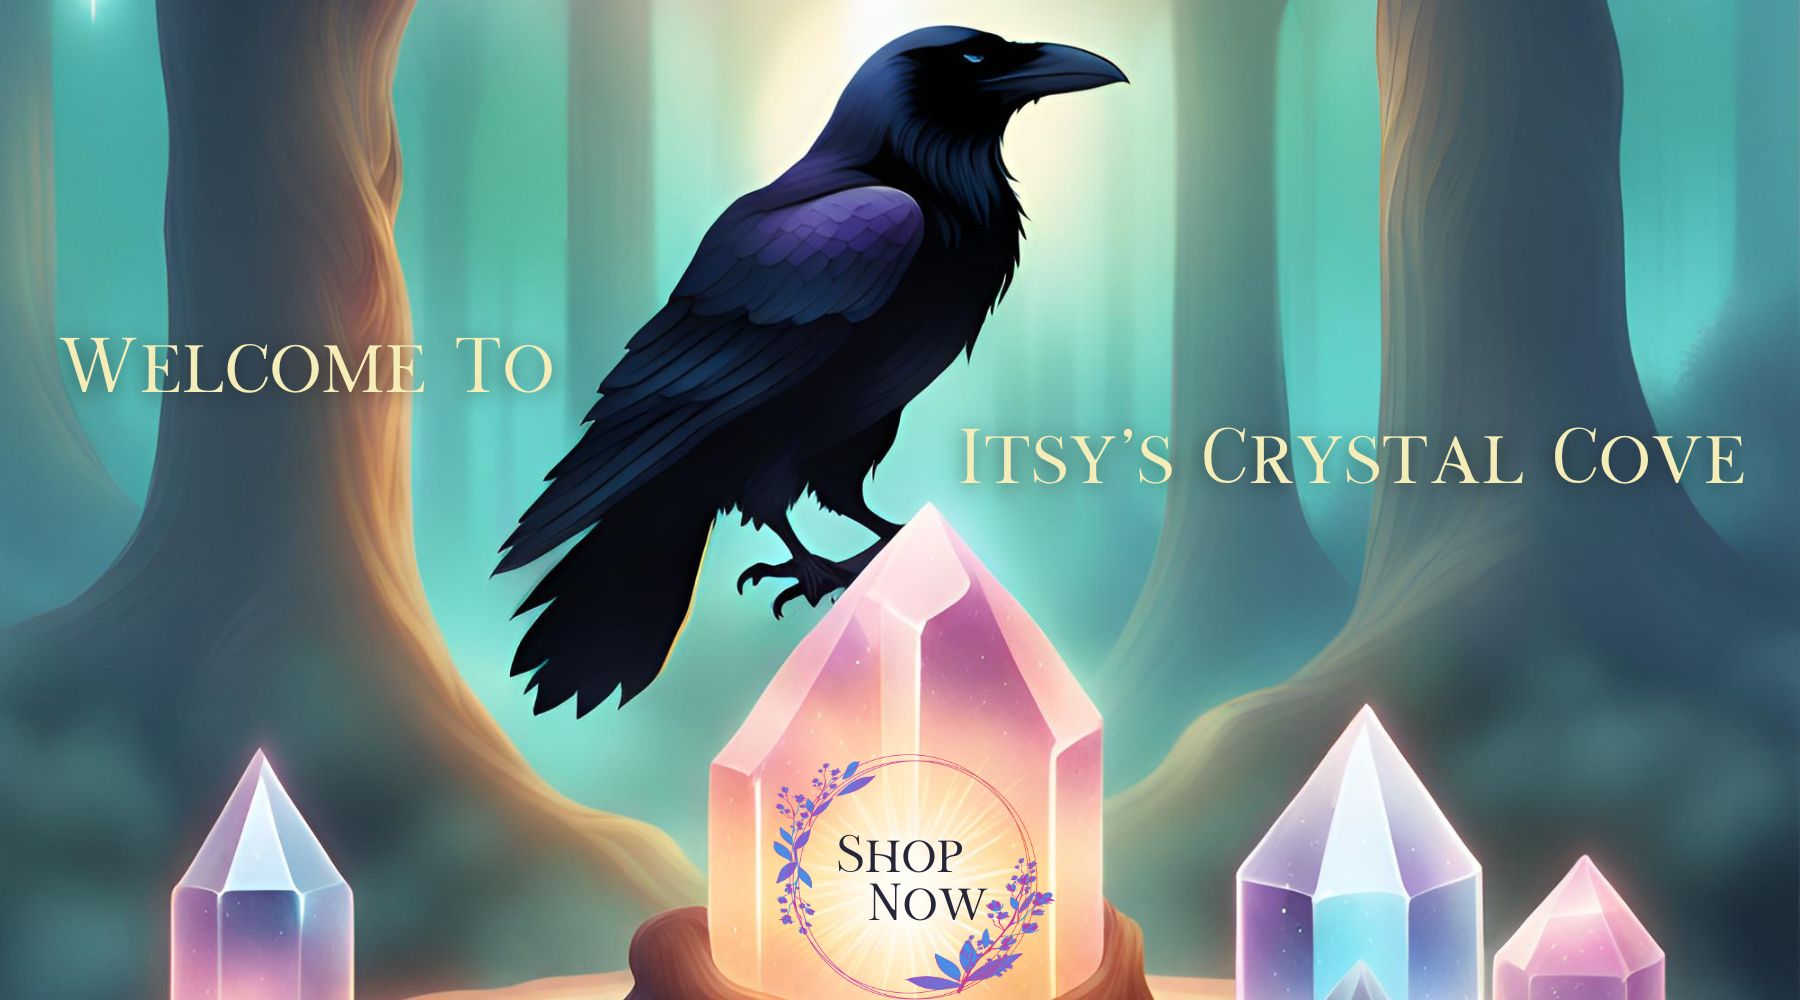 Itsy's Crystal Cove LLC